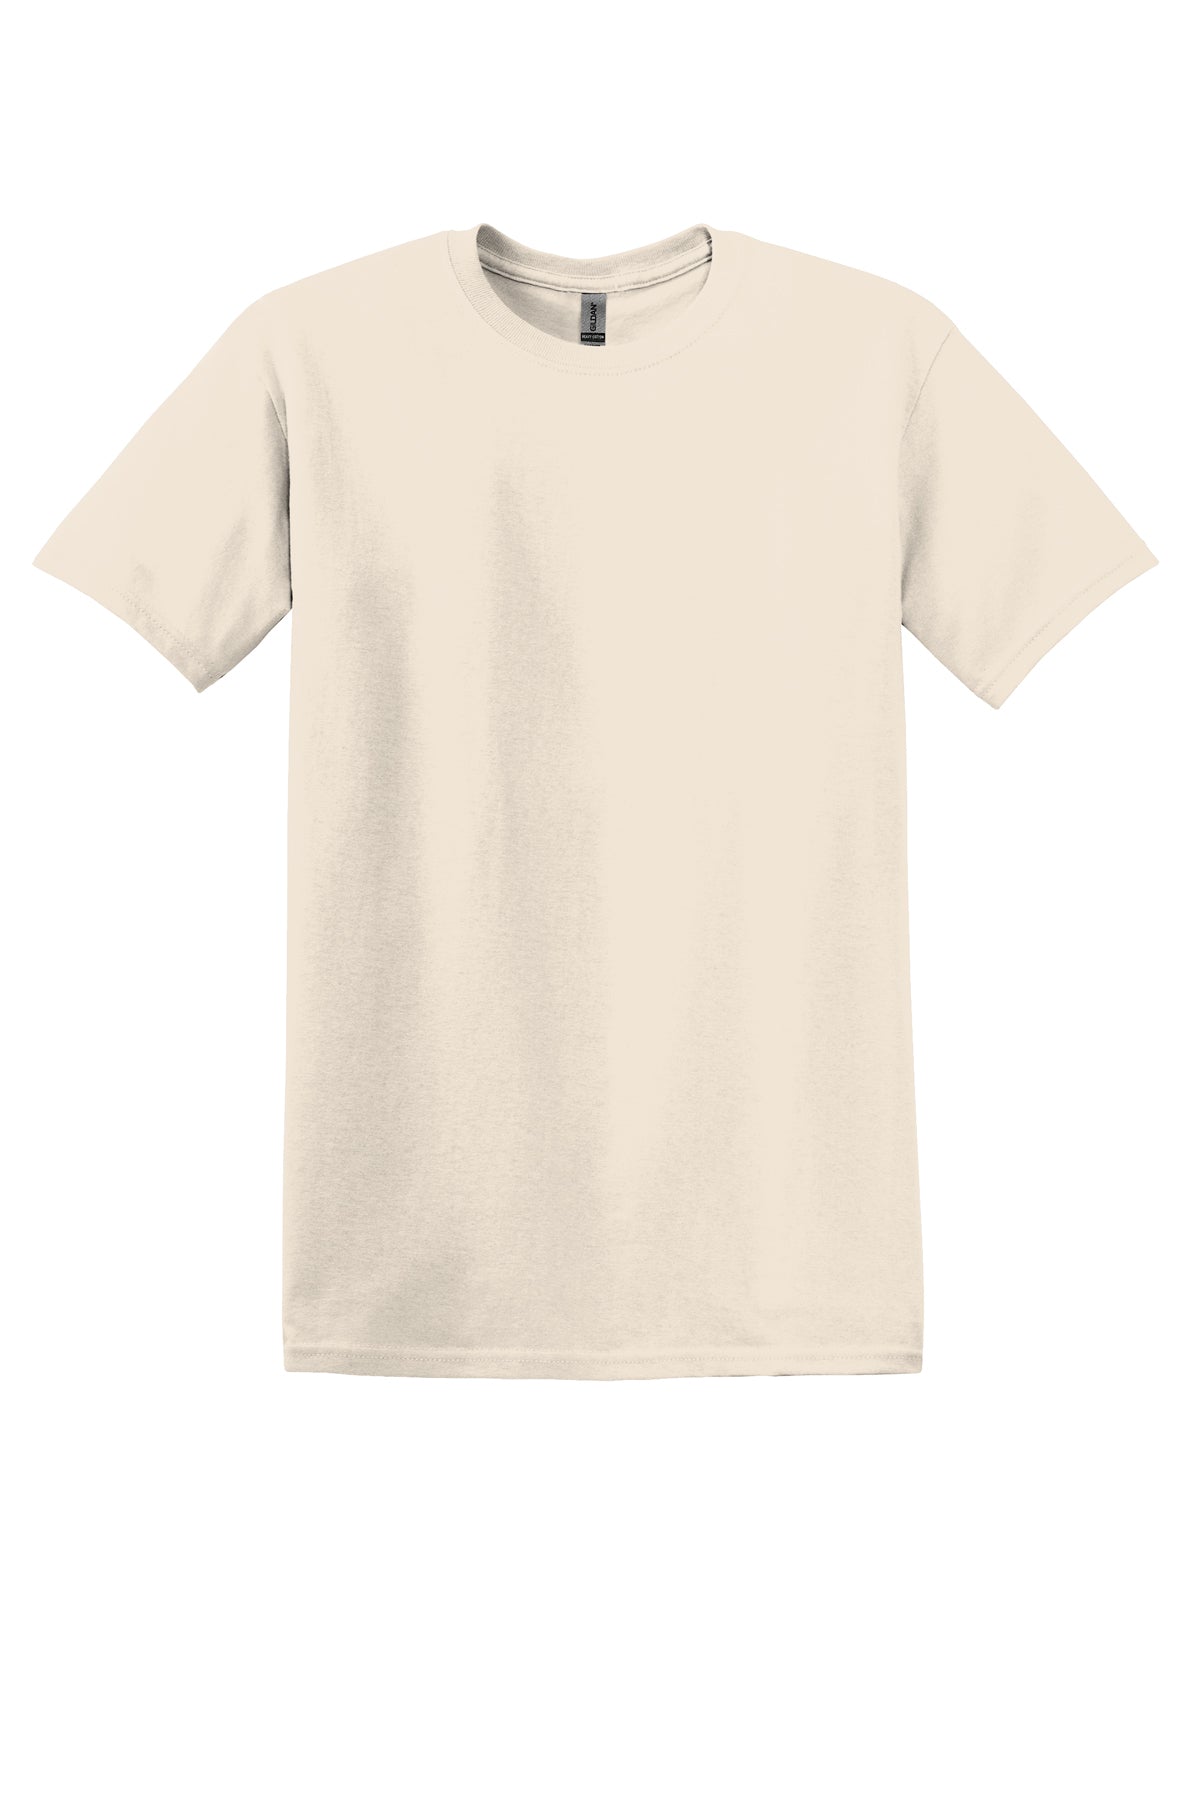 Gildan Mens/Unisex S/S Shirts Natural